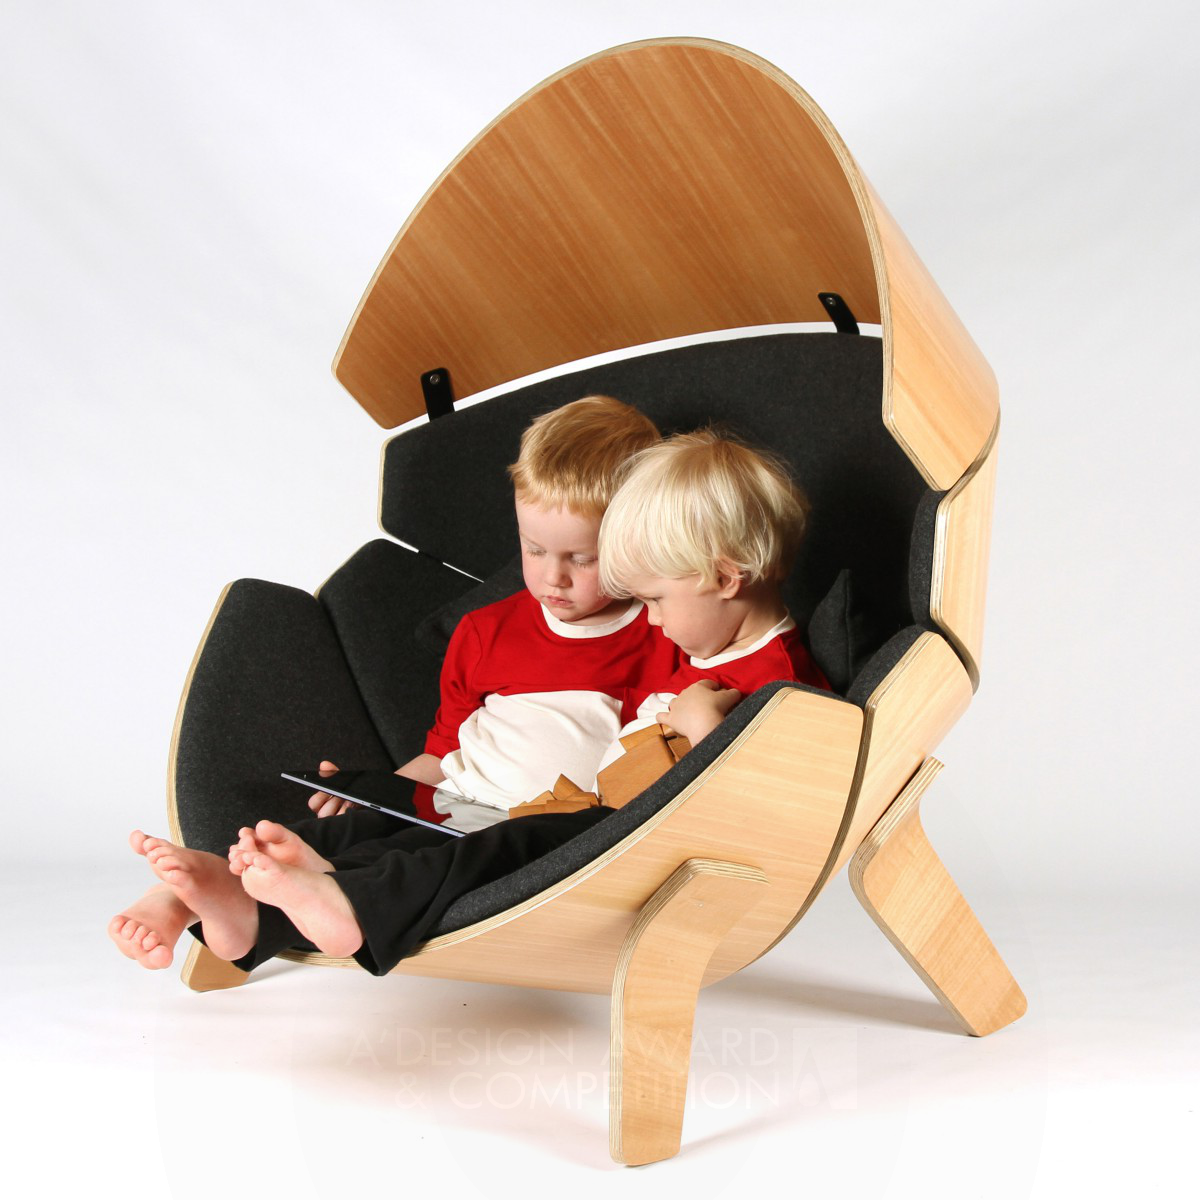 Hideaway Children's Chair by Think & Shift Studio